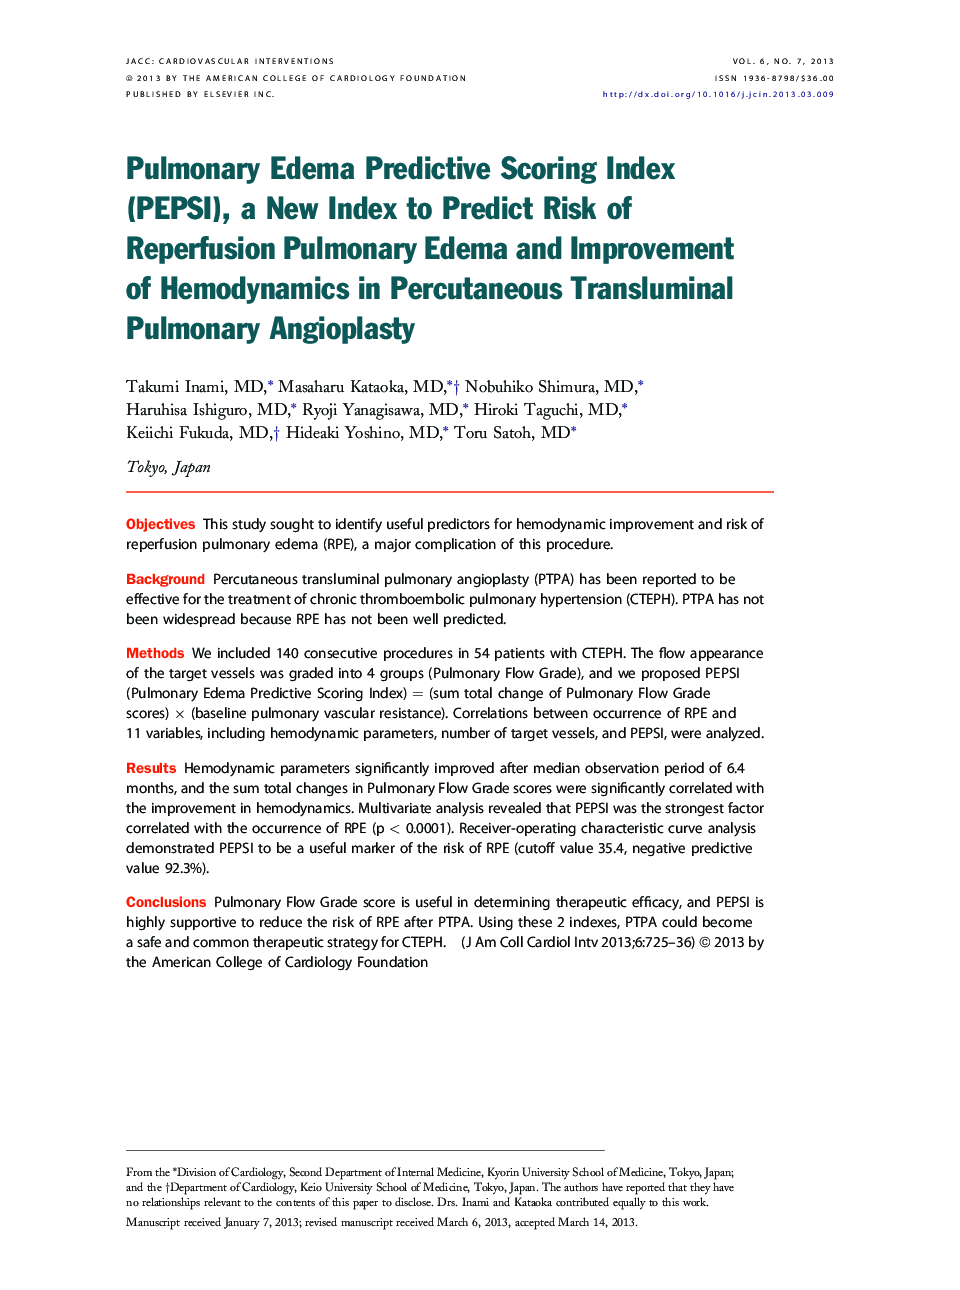 Pulmonary Edema Predictive Scoring Index (PEPSI), a New Index to Predict Risk of Reperfusion Pulmonary Edema and Improvement of Hemodynamics in Percutaneous Transluminal Pulmonary Angioplasty 